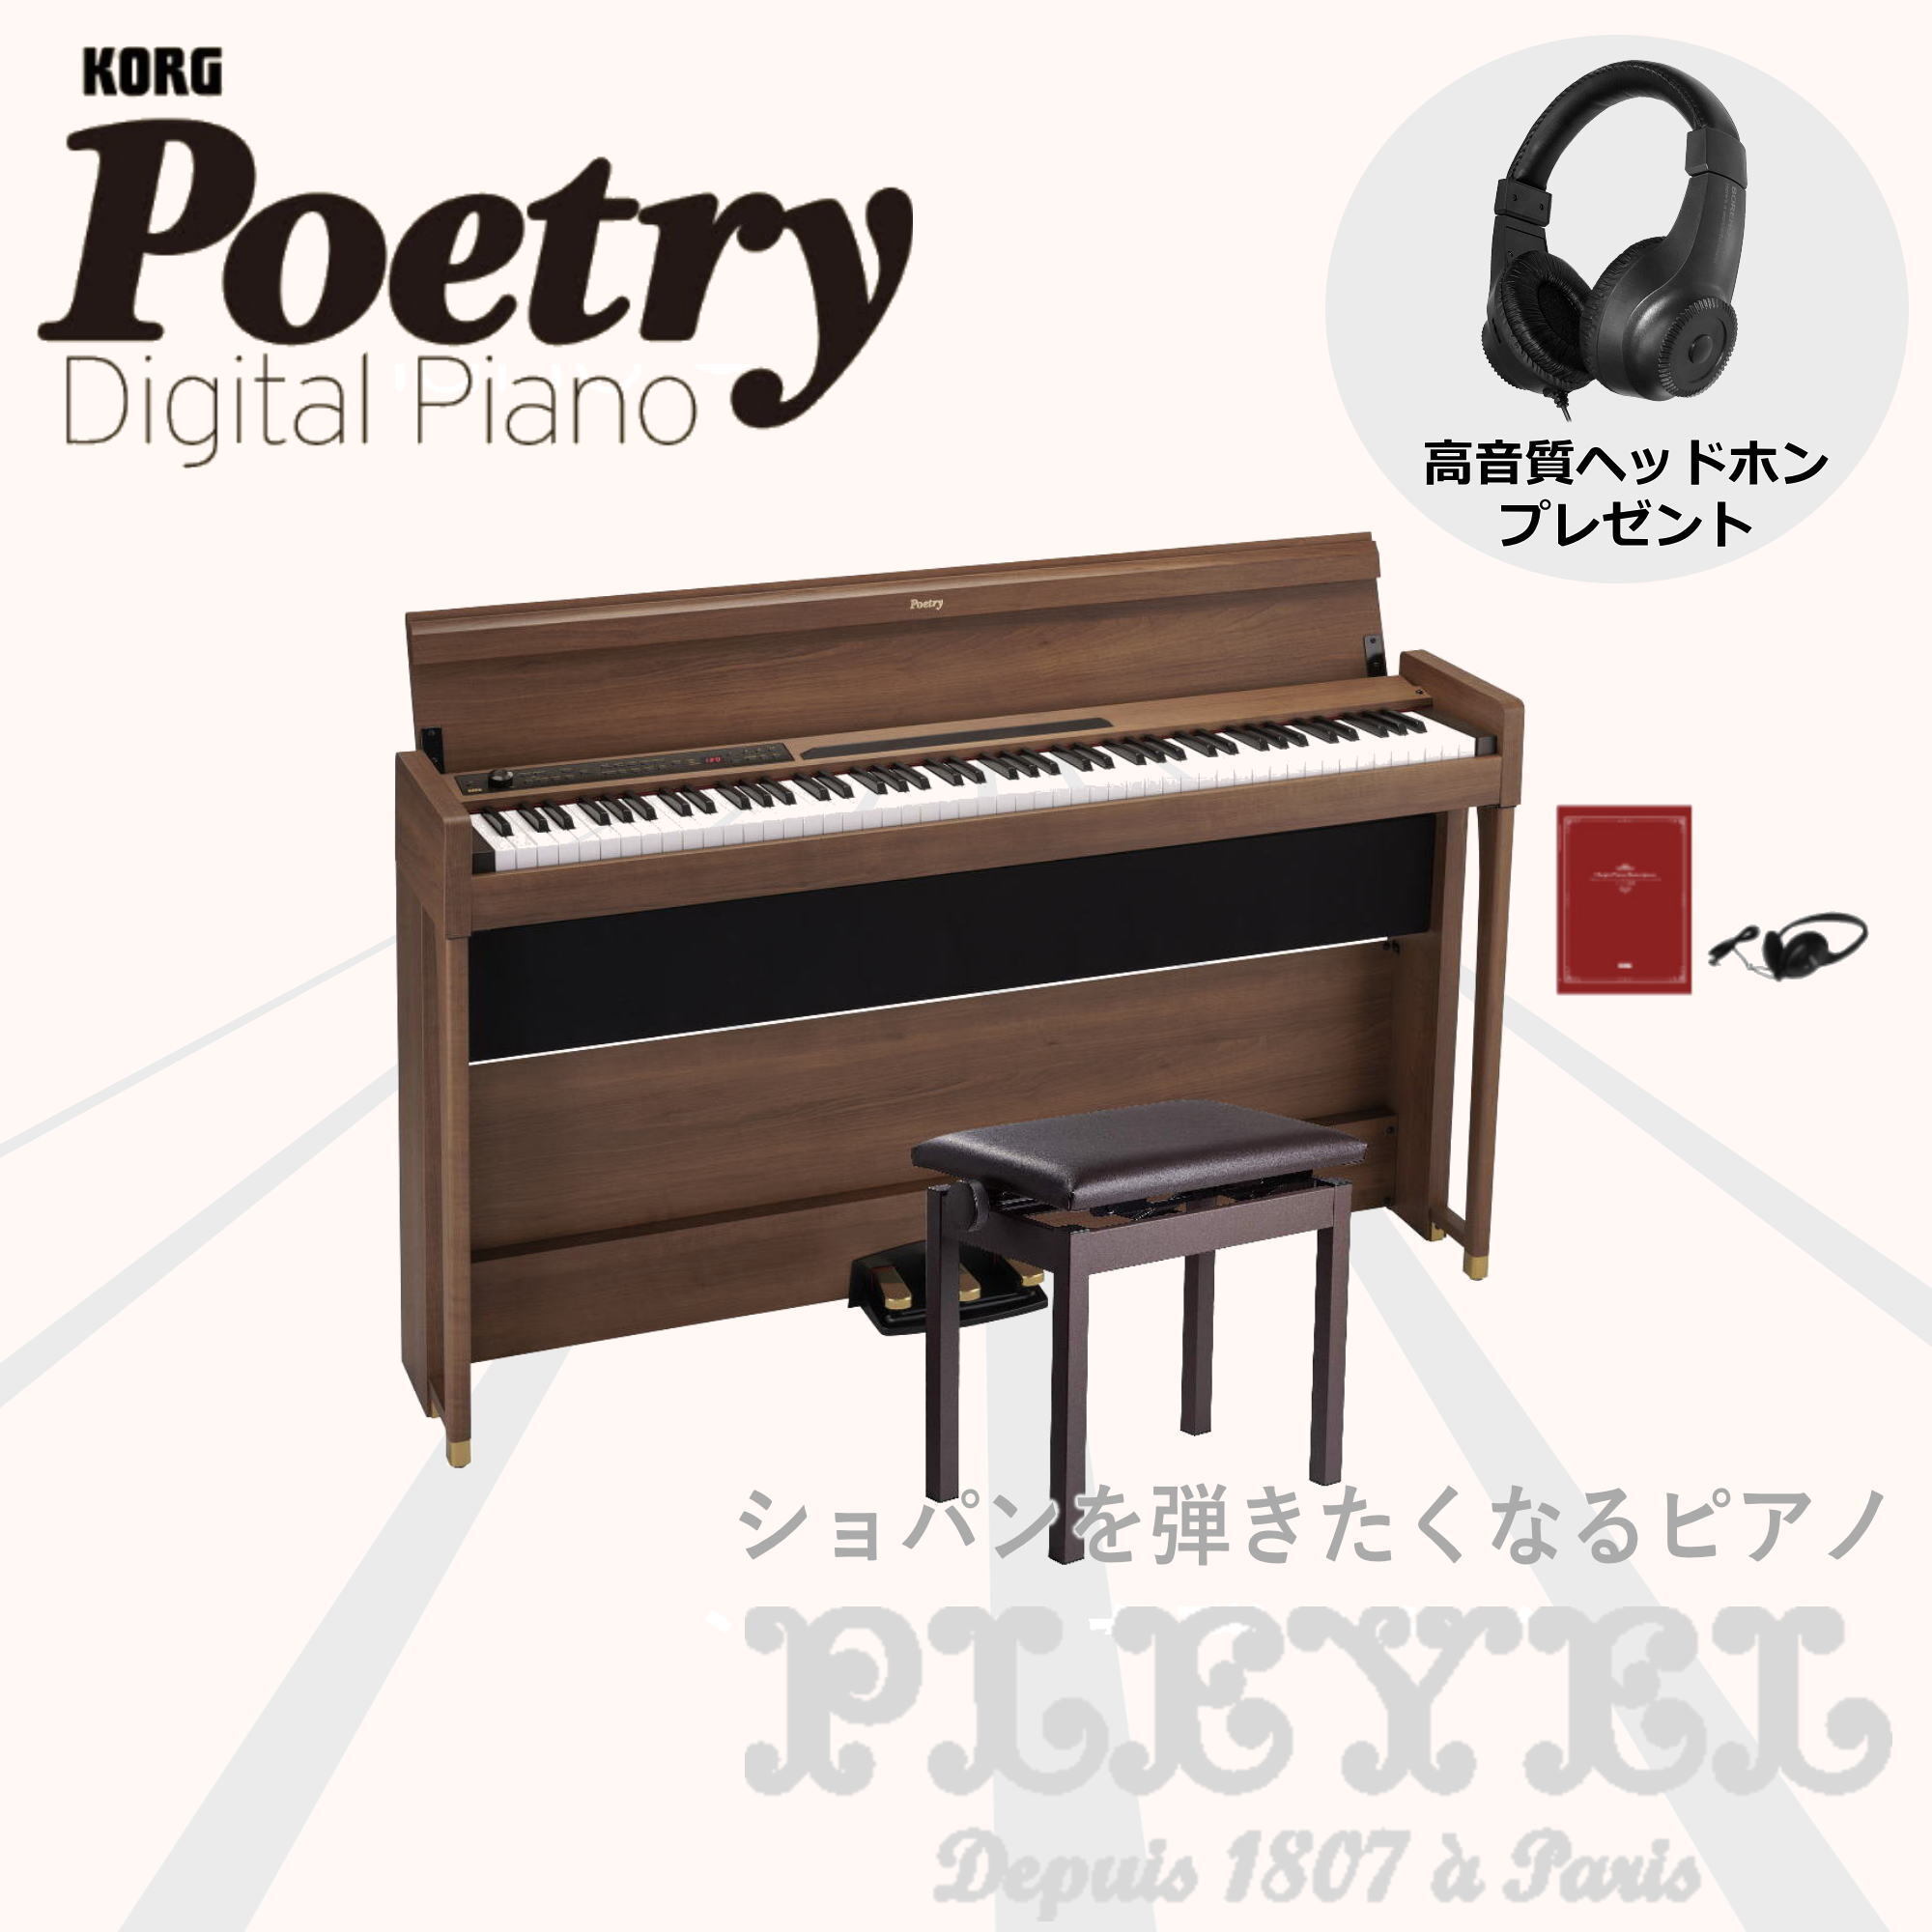 KORG コルグ 電子ピアノ デジタルピアノ 88鍵盤 Poetry ポエトリー ヘッドホン・楽譜集付属